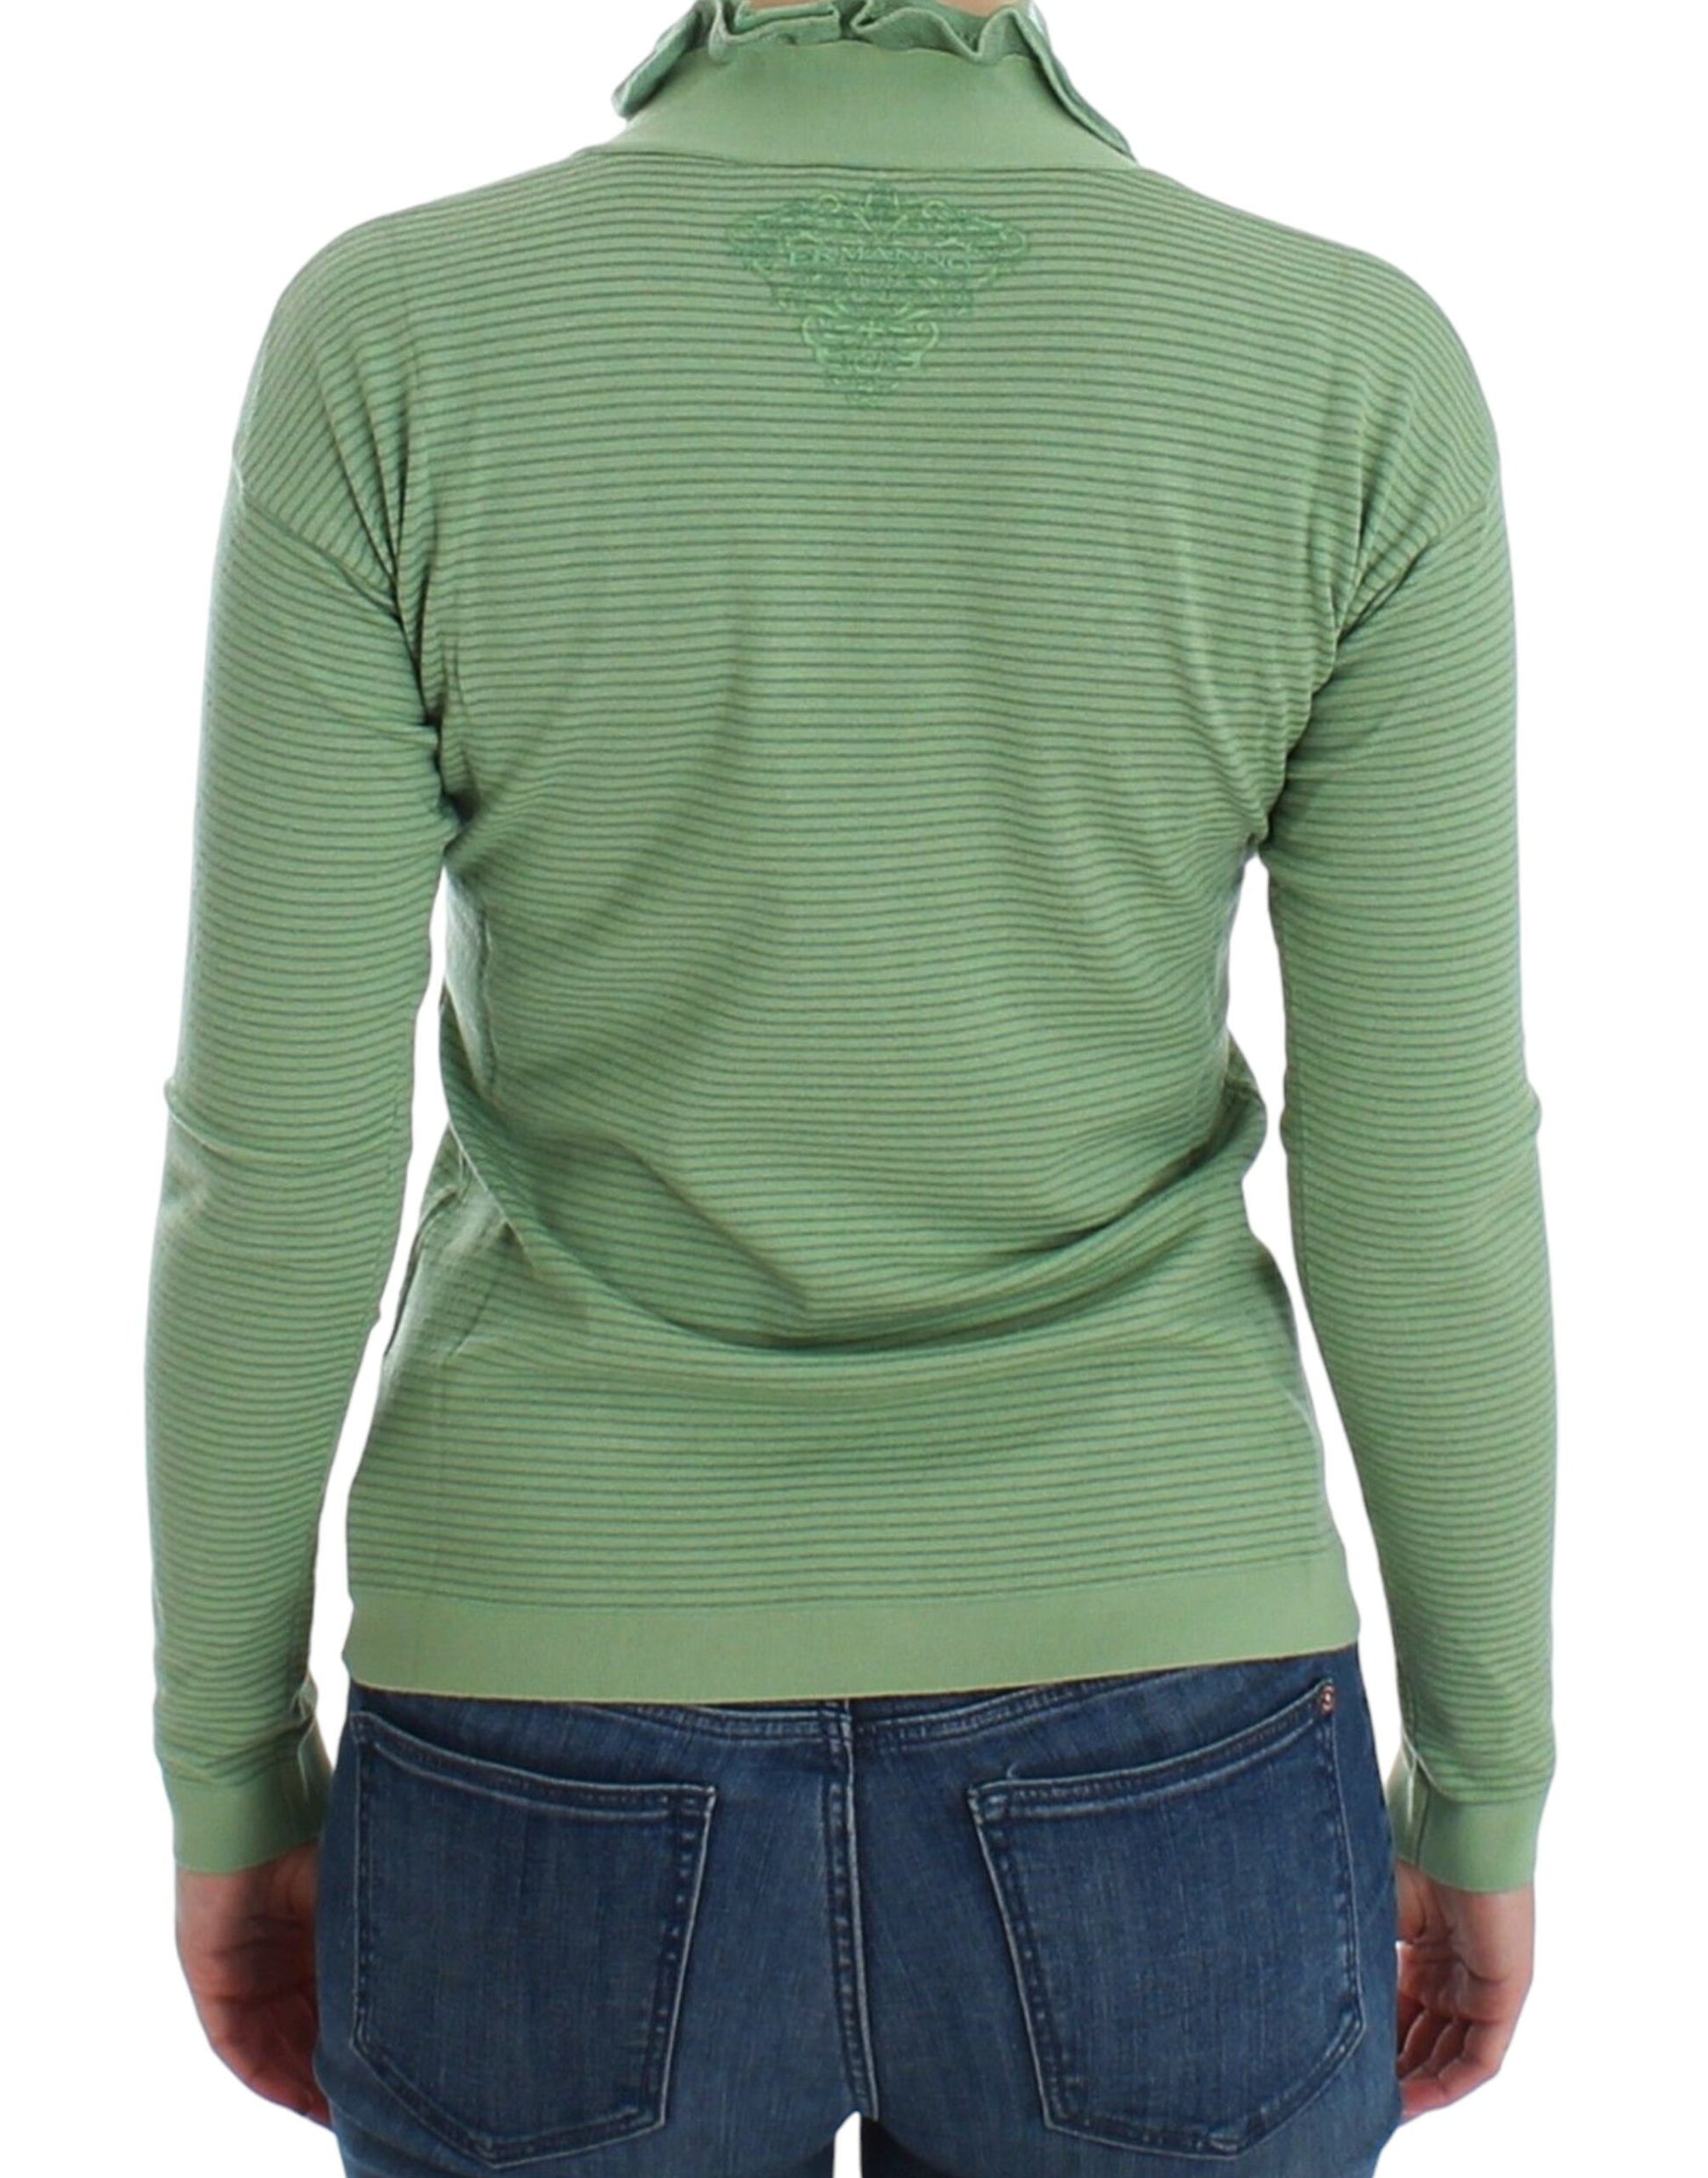 Elegant Green Striped Wool Blend Sweater